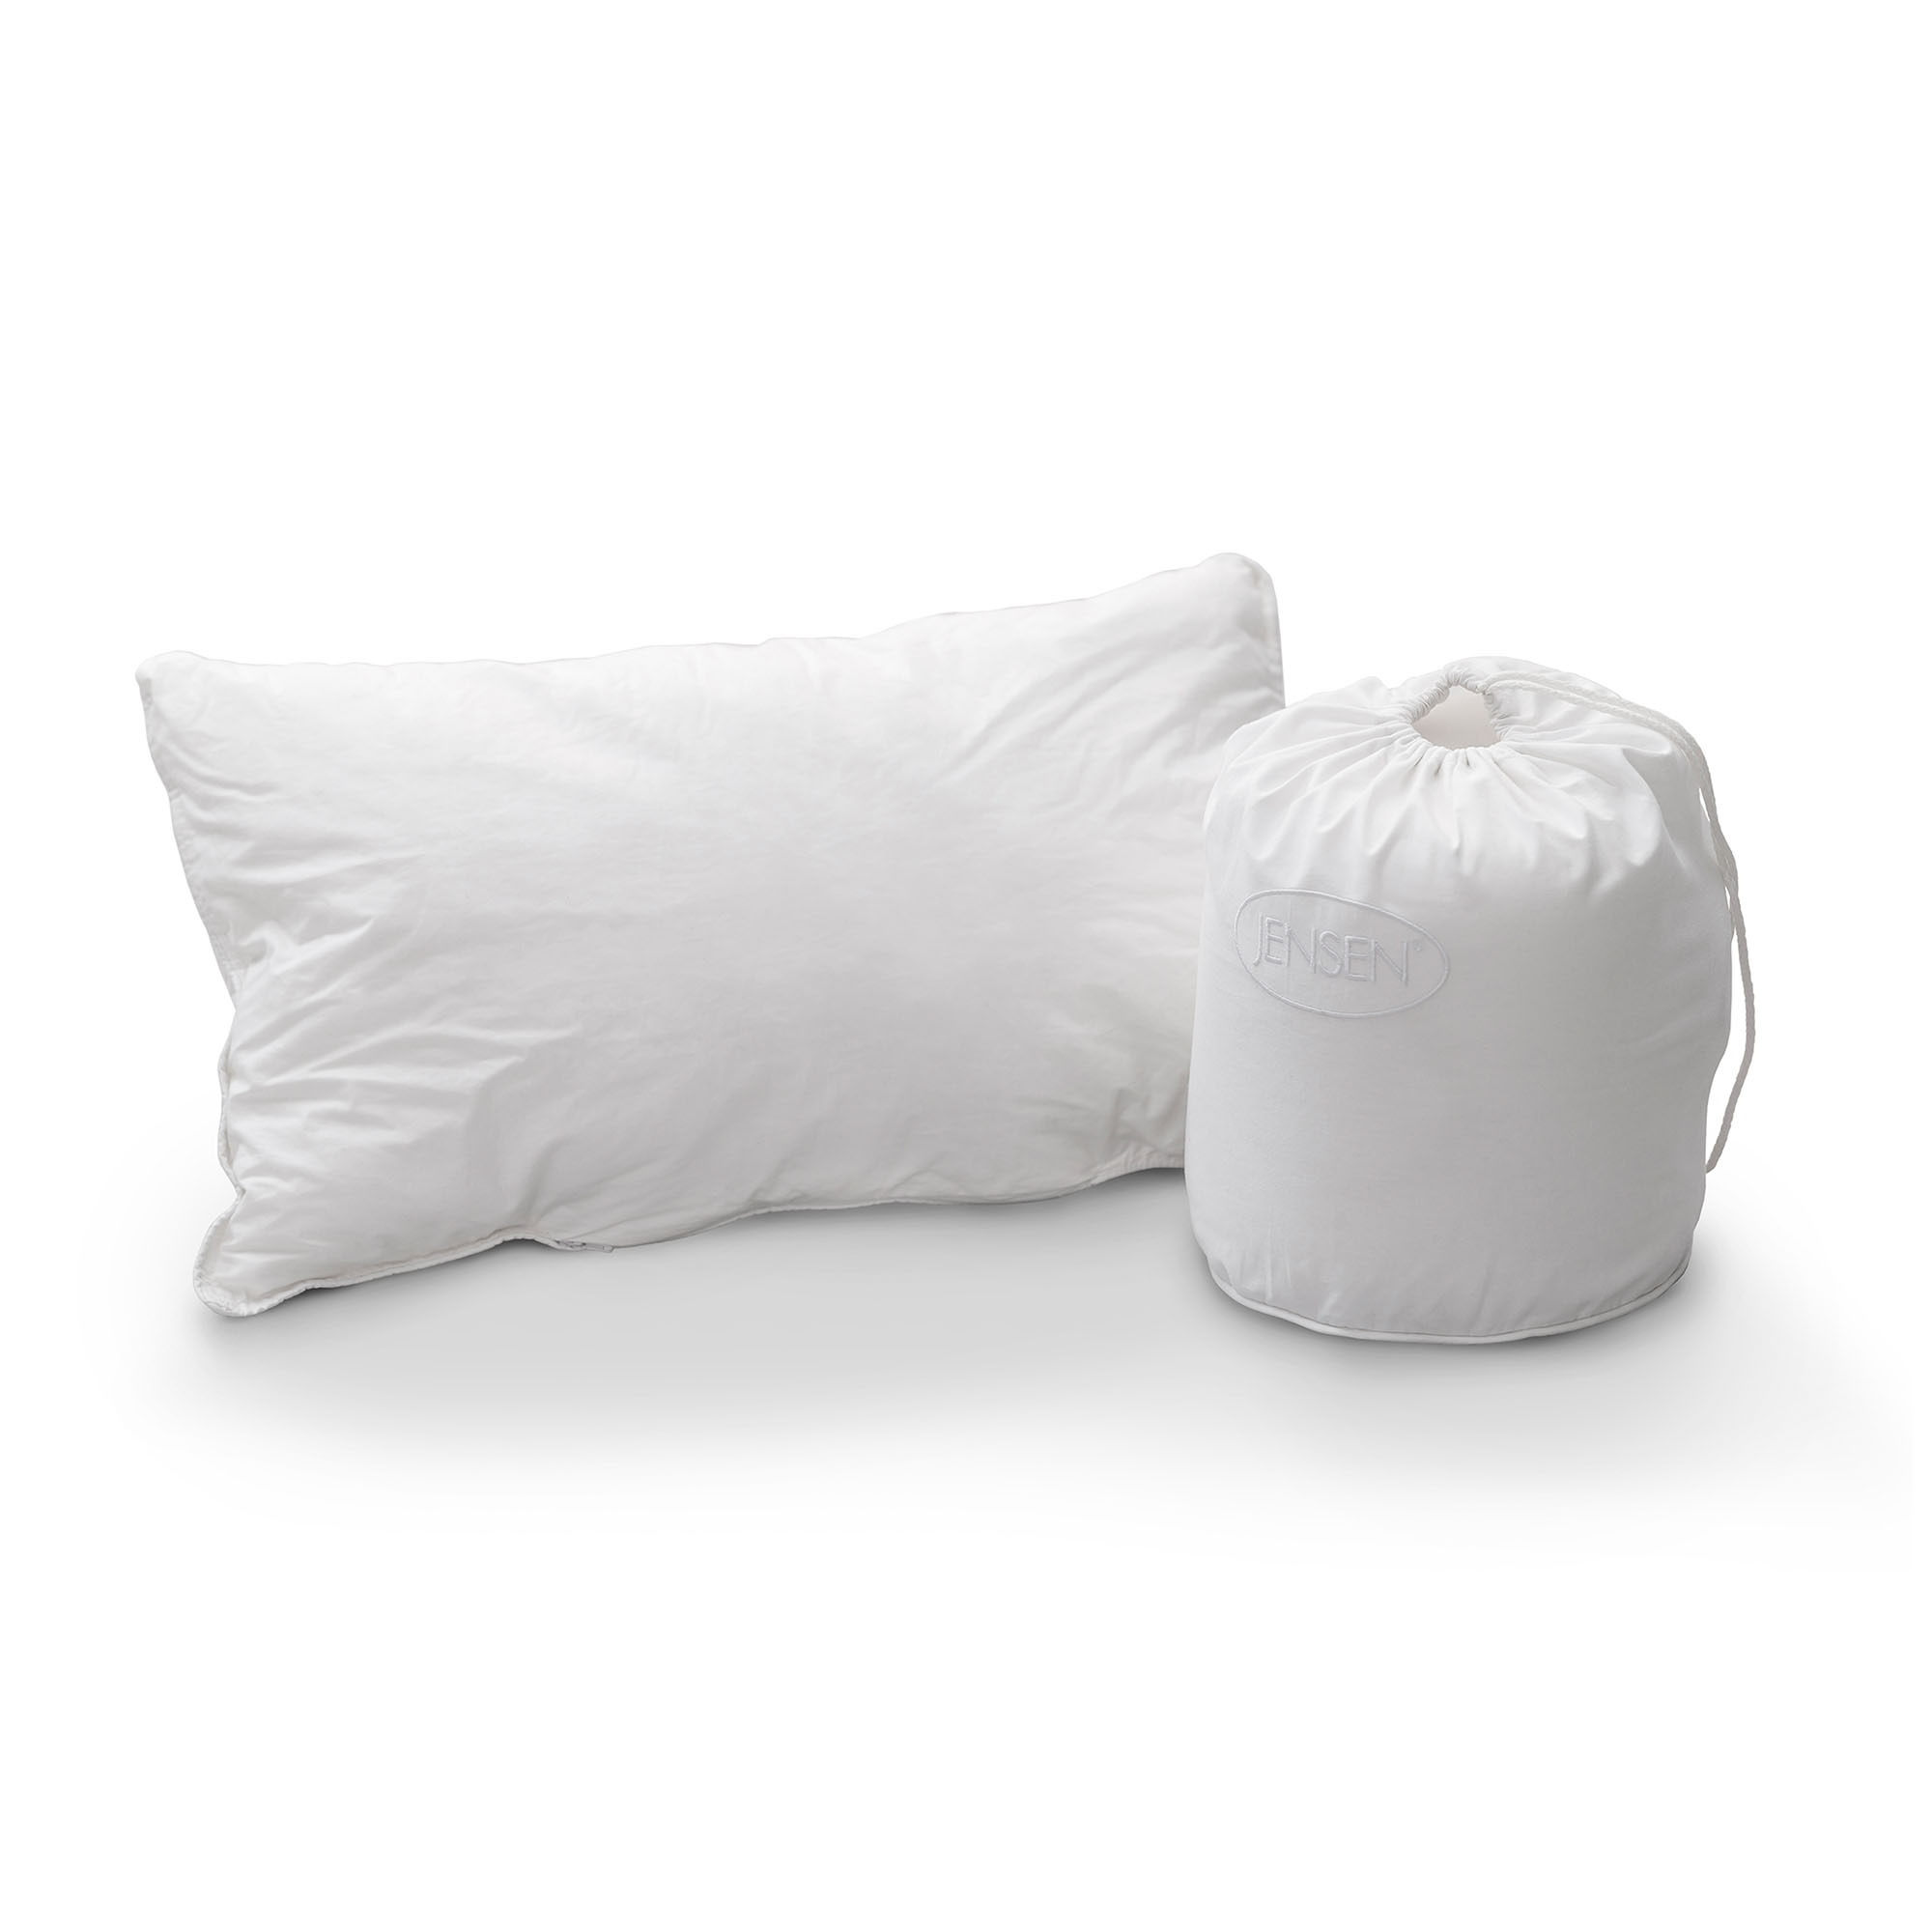 Jensen Travel Pillow 25x45 cm